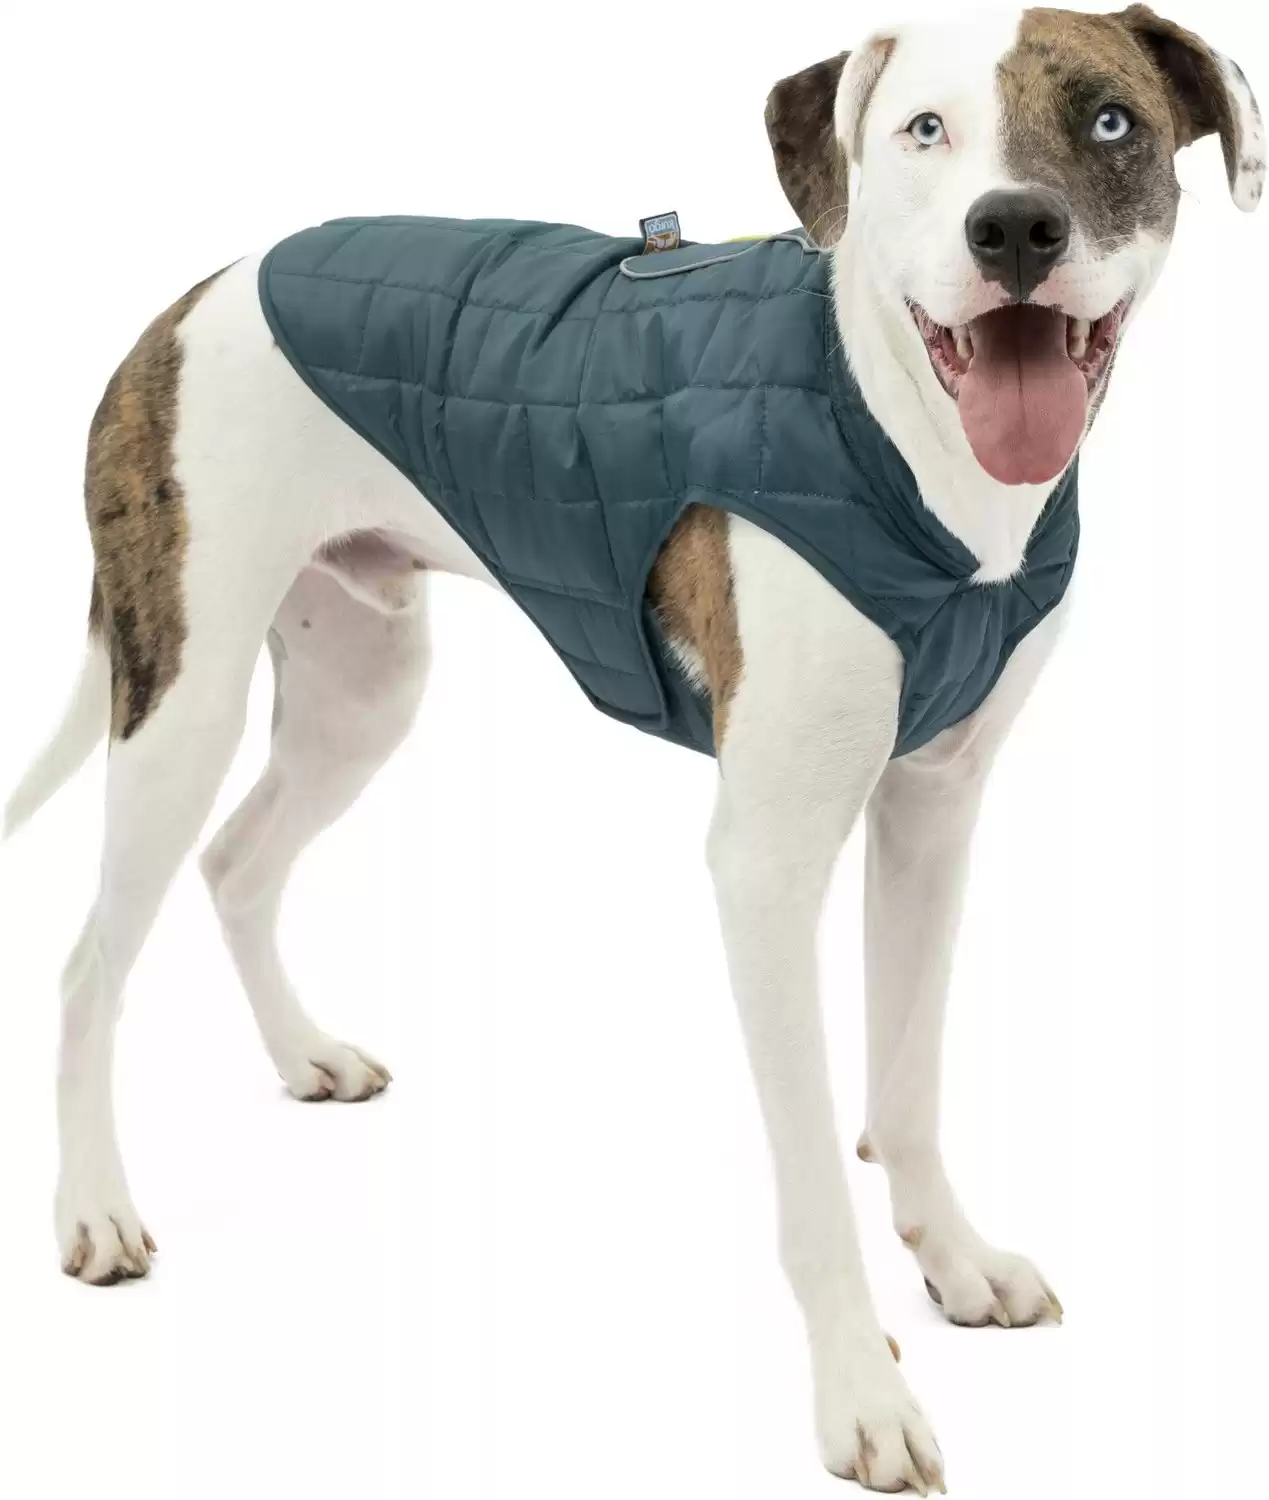 Kurgo Loft Reversible Dog Coat